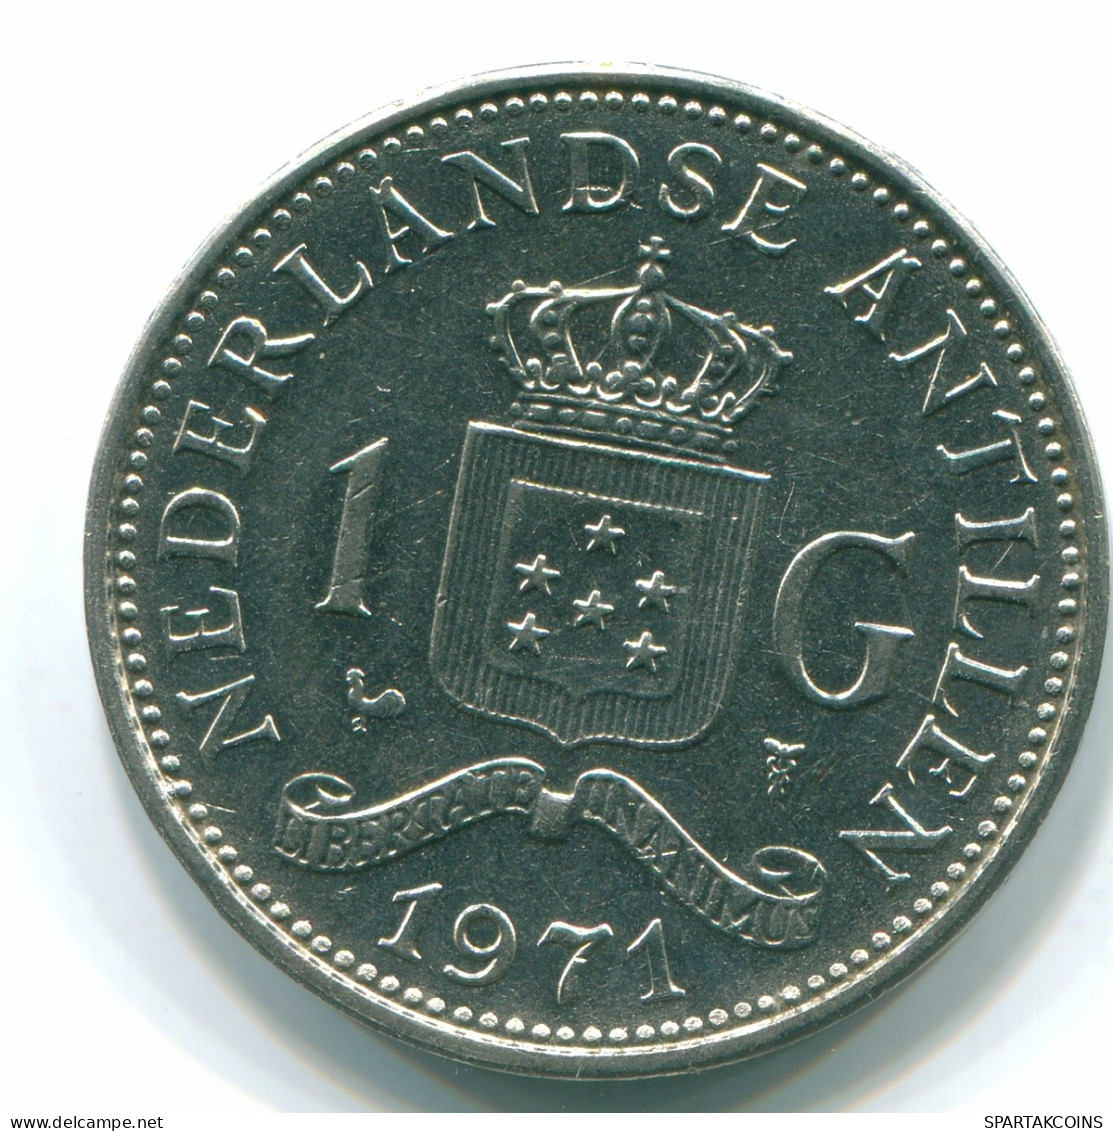 1 GULDEN 1971 NETHERLANDS ANTILLES Nickel Colonial Coin #S11938.U.A - Antille Olandesi